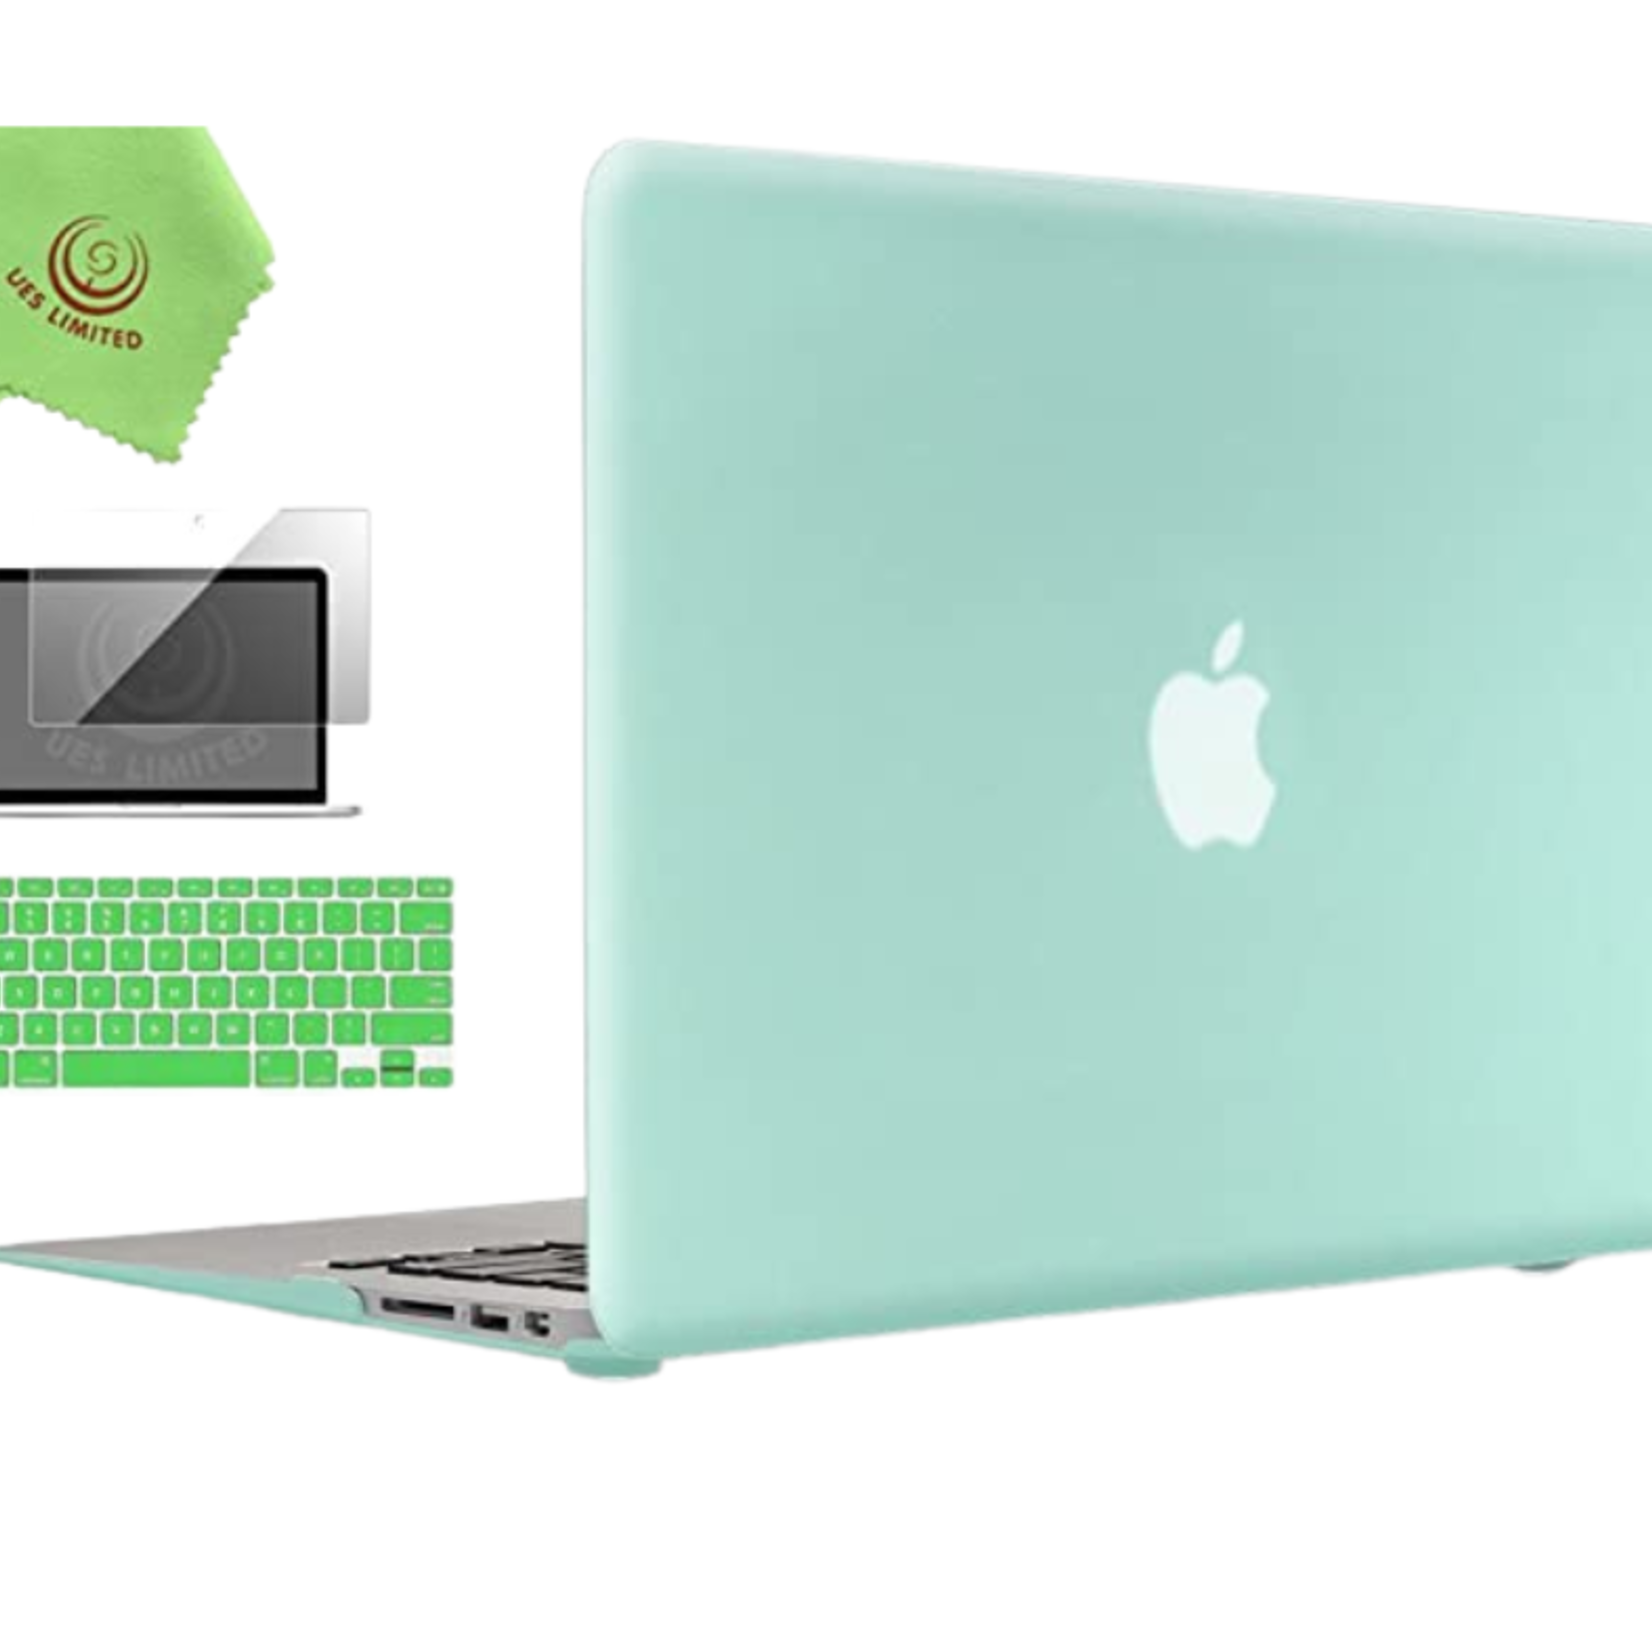 UESWILL MacBook Air Cover 13" - Mint